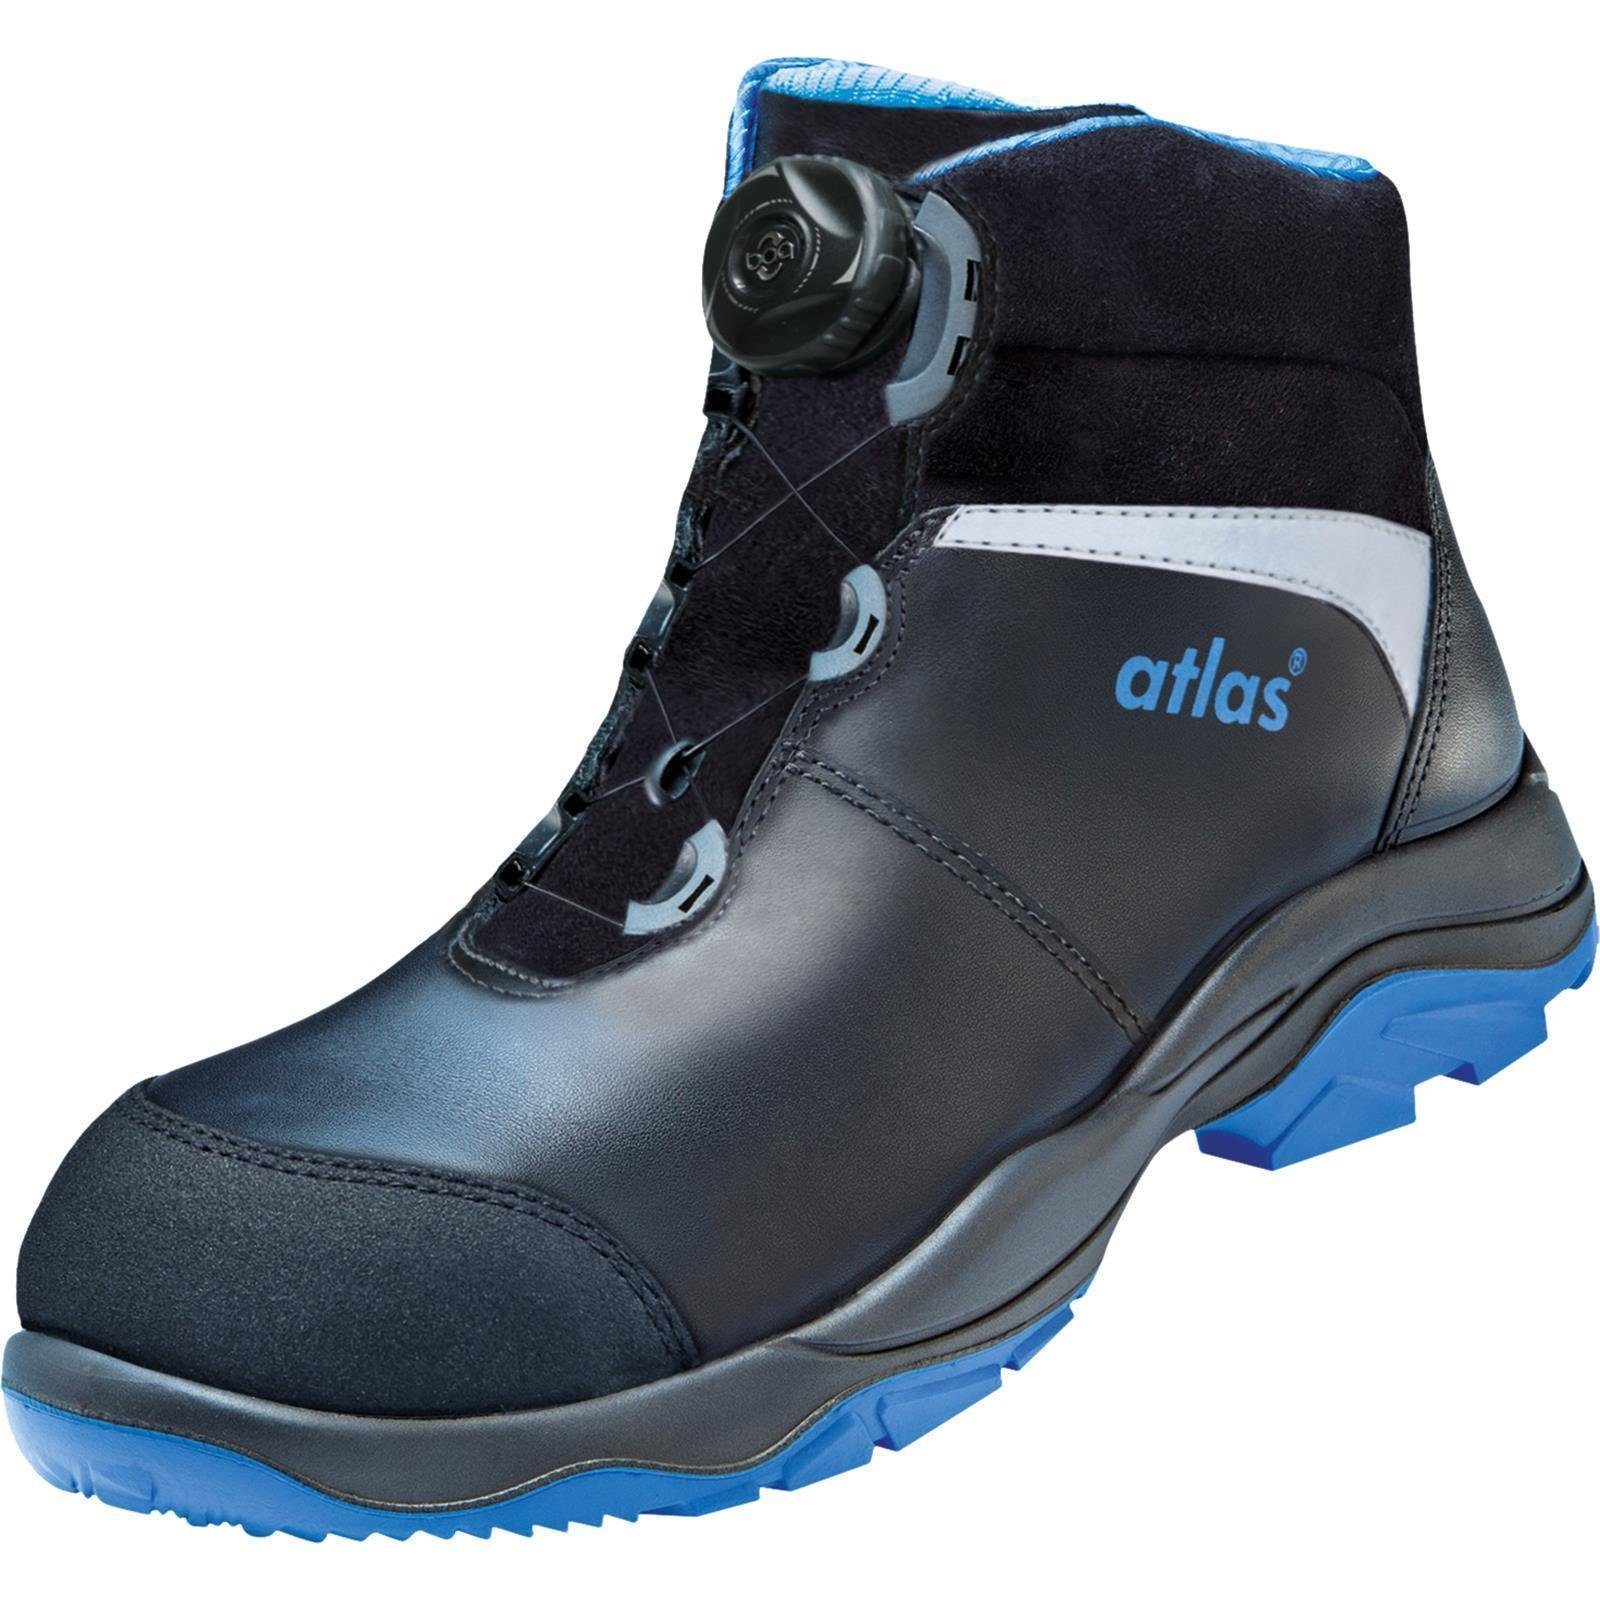 Schuhe Sicherheitsschuhe ATLAS Atlas SL 9845 XP Boa EN ISO 20345 S3 Sicherheitssc Arbeitsschuh